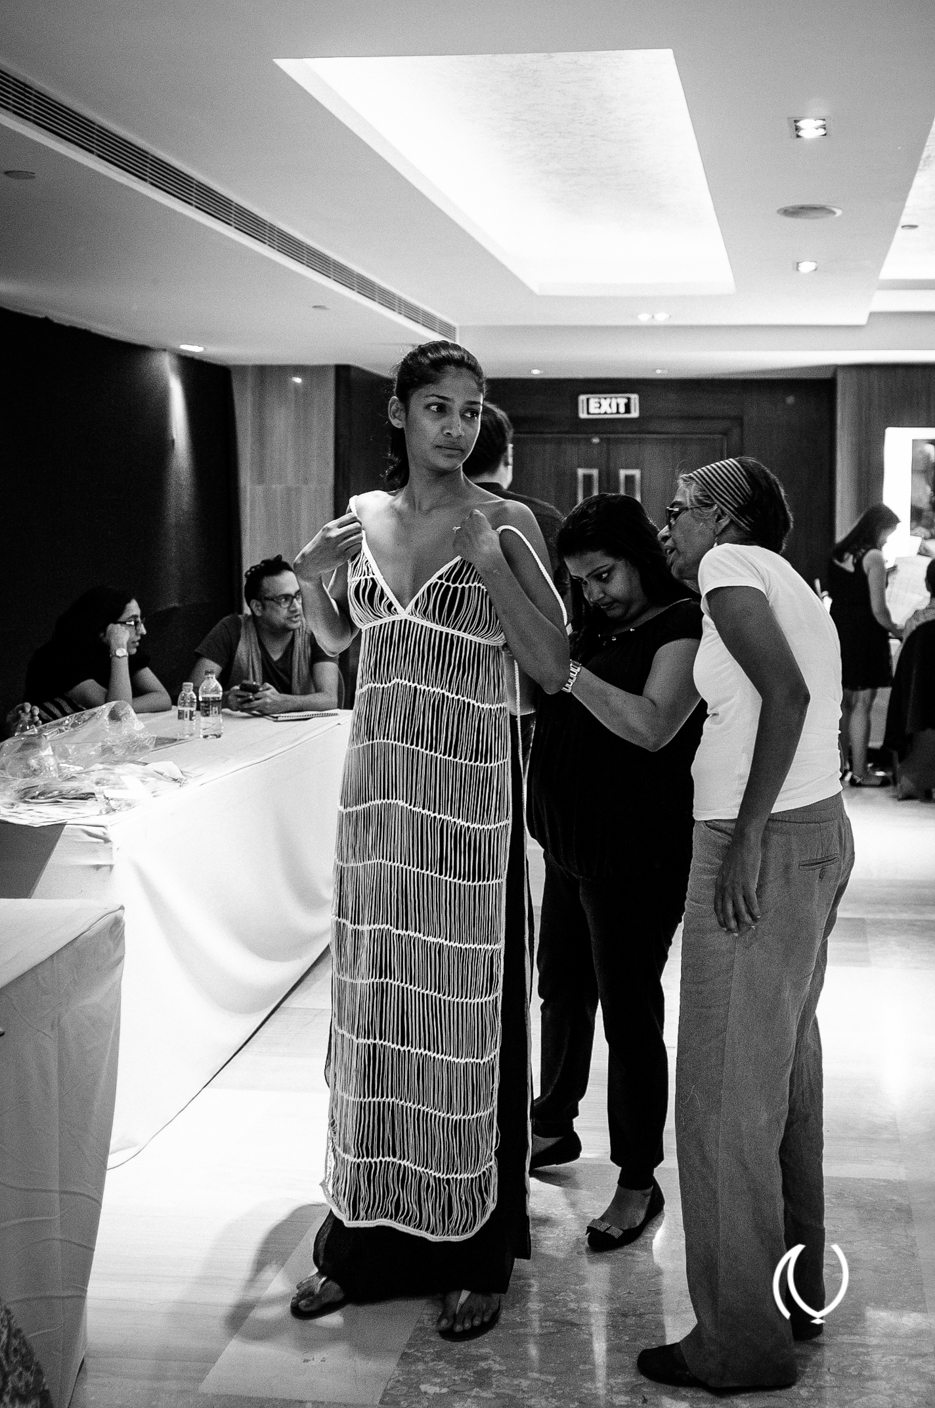 Wendell-Rodricks-WIFWSS14-India-Fashion-Week-Naina.co-La-Raconteuse-Visuelle-Visual-Storyteller-Photographer